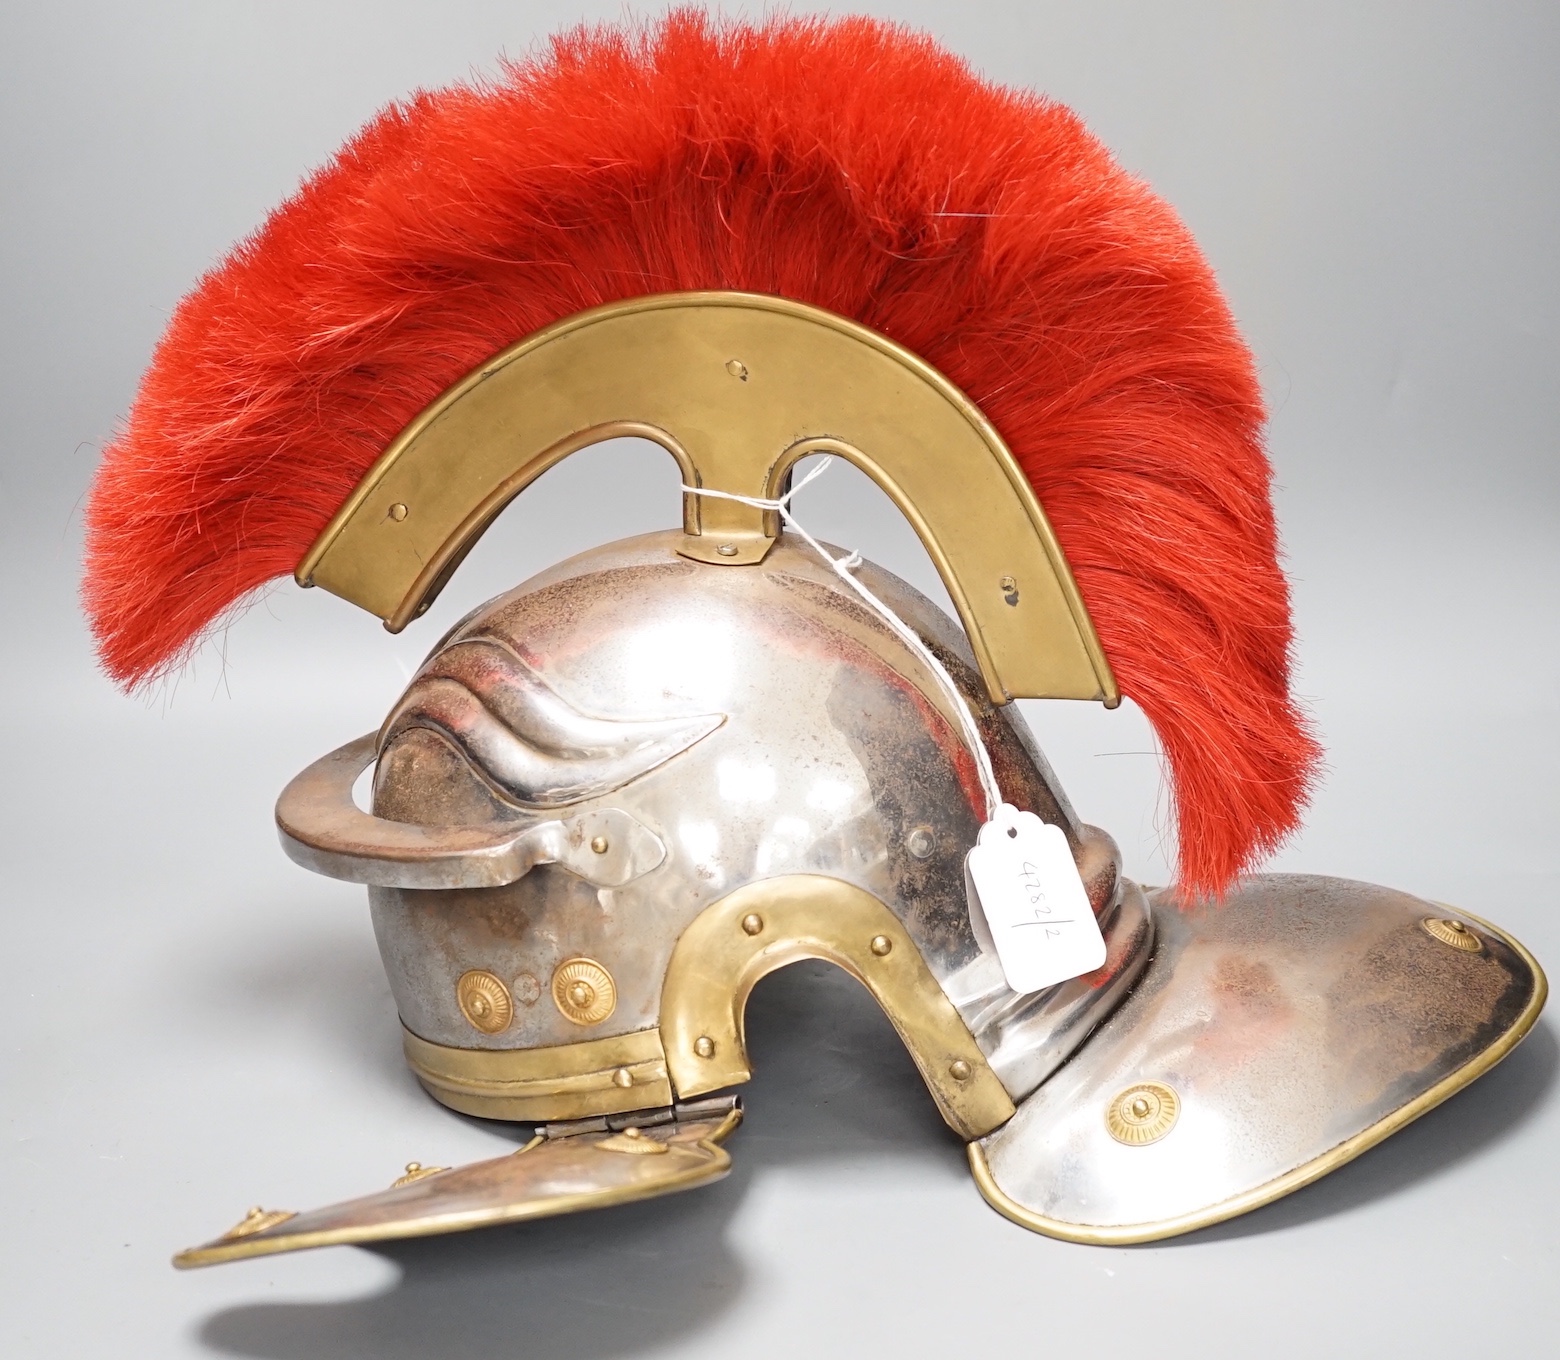 A reproduction Centurion helmet